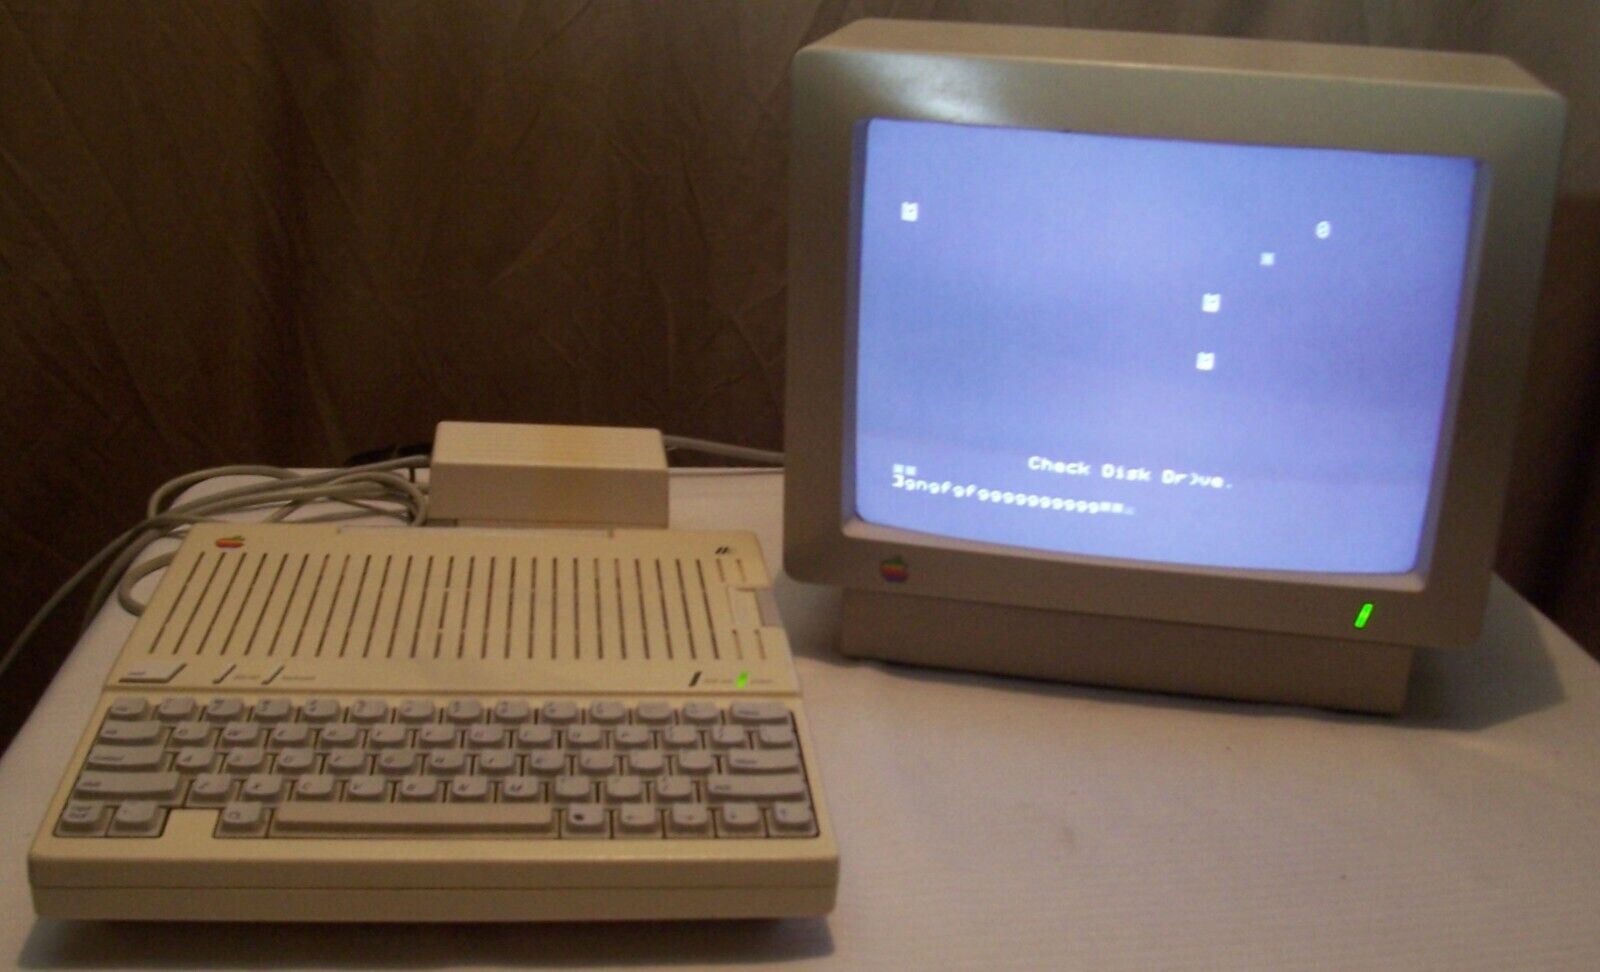 Old Apple Computer Monitor Keyboard Power Supply 1986 Korea Color A2M6020 #E27